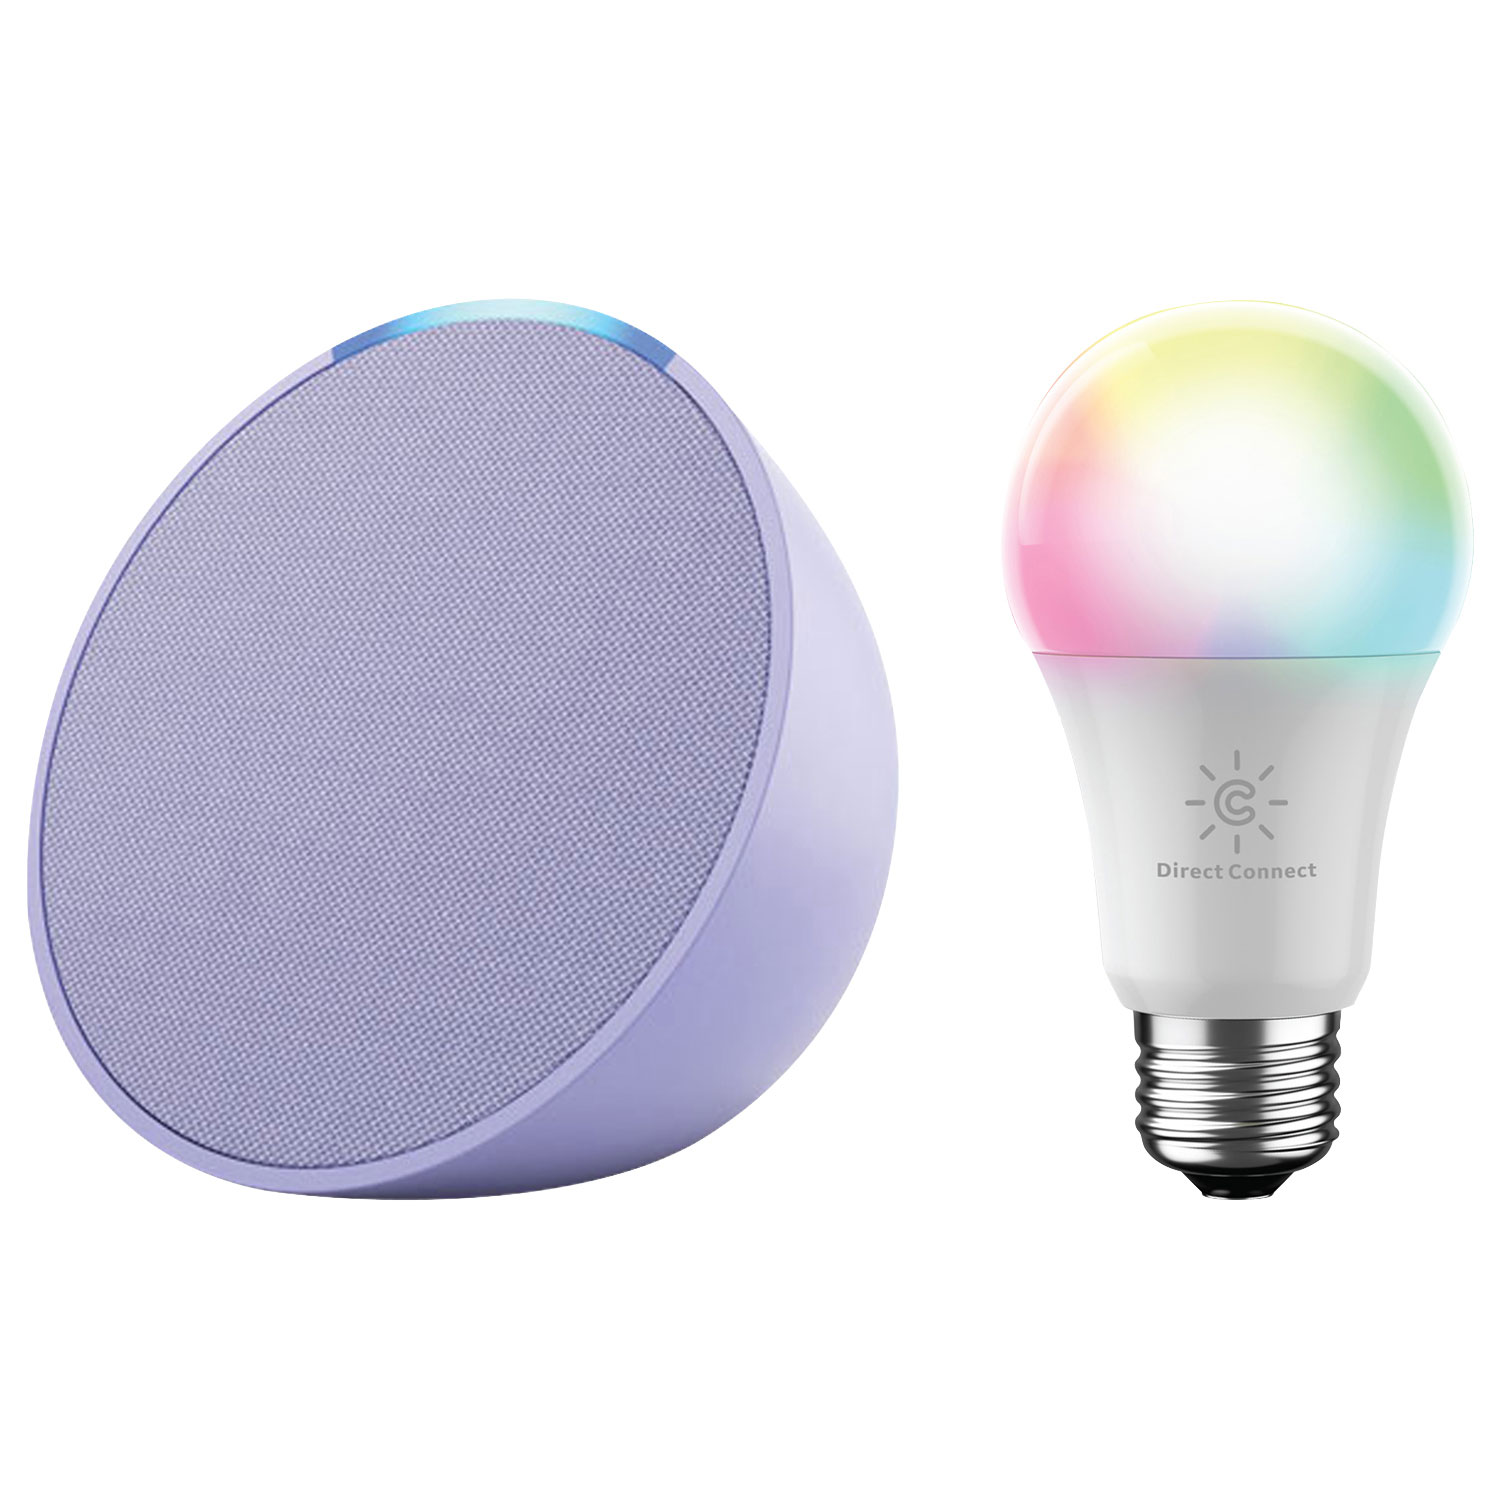 Amazon Echo Pop Smart Speaker with Alexa & Cync A19 Smart LED Light Bulb - Lavender Bloom